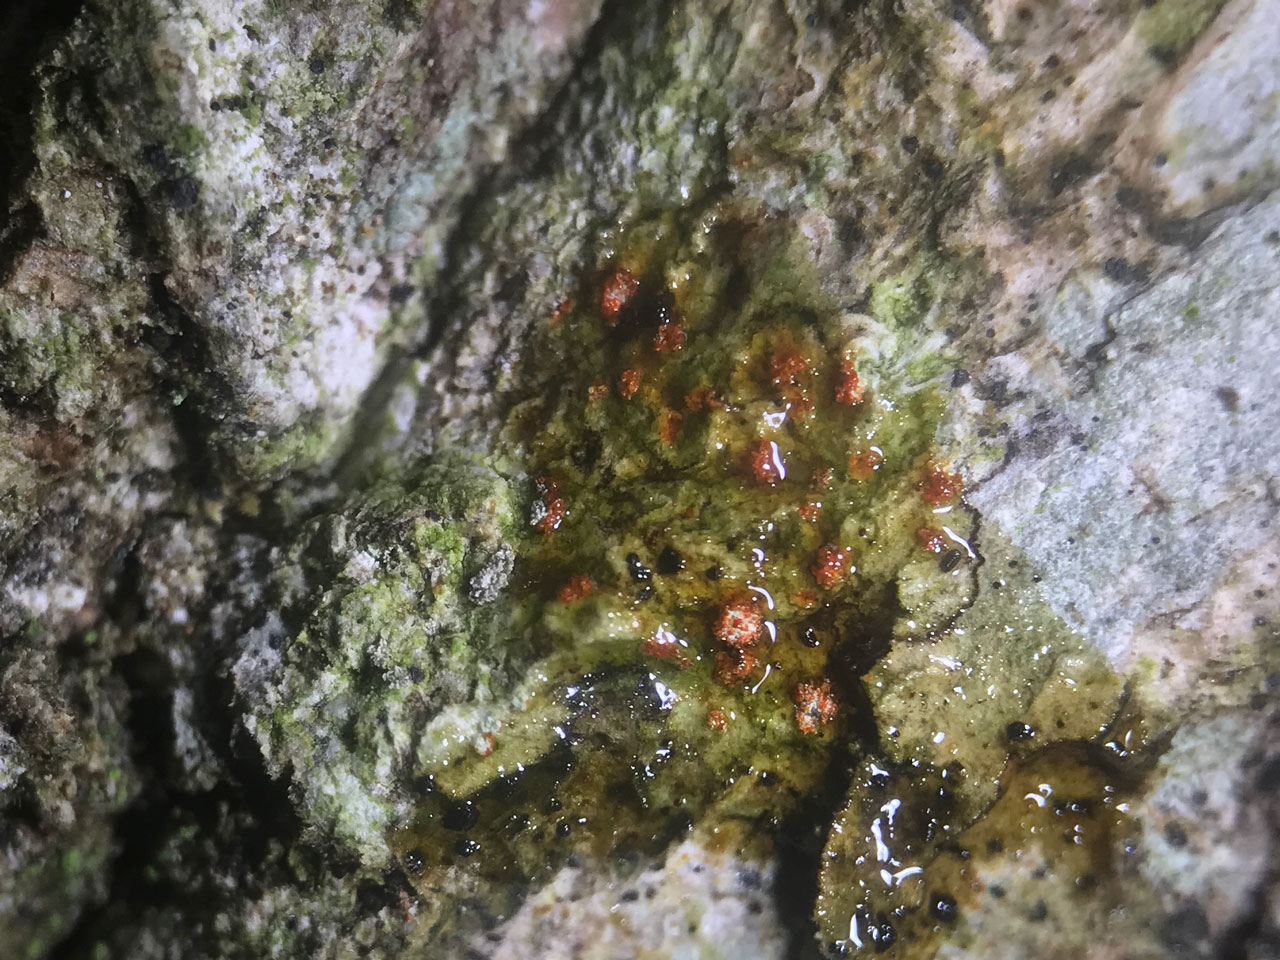 Schizotrema quercicola, Anderwood Inclosure; New Forest